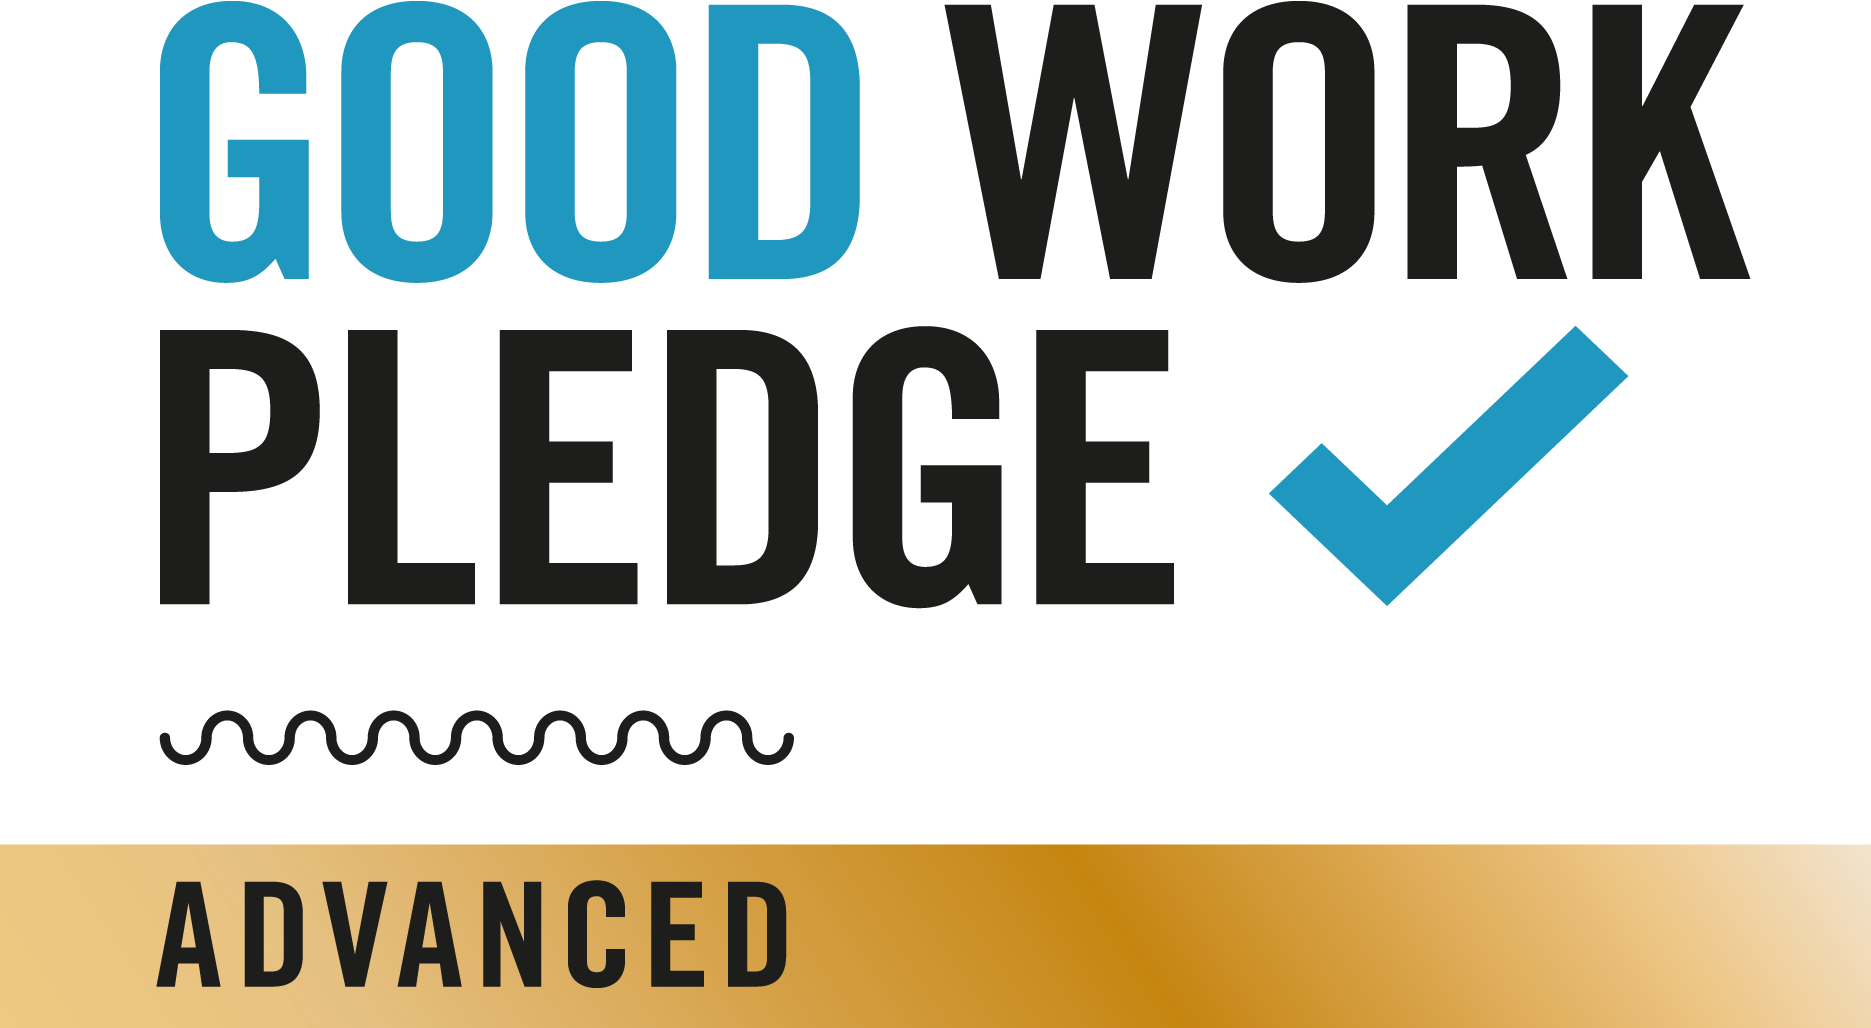 Good Work Pledge advanced logo